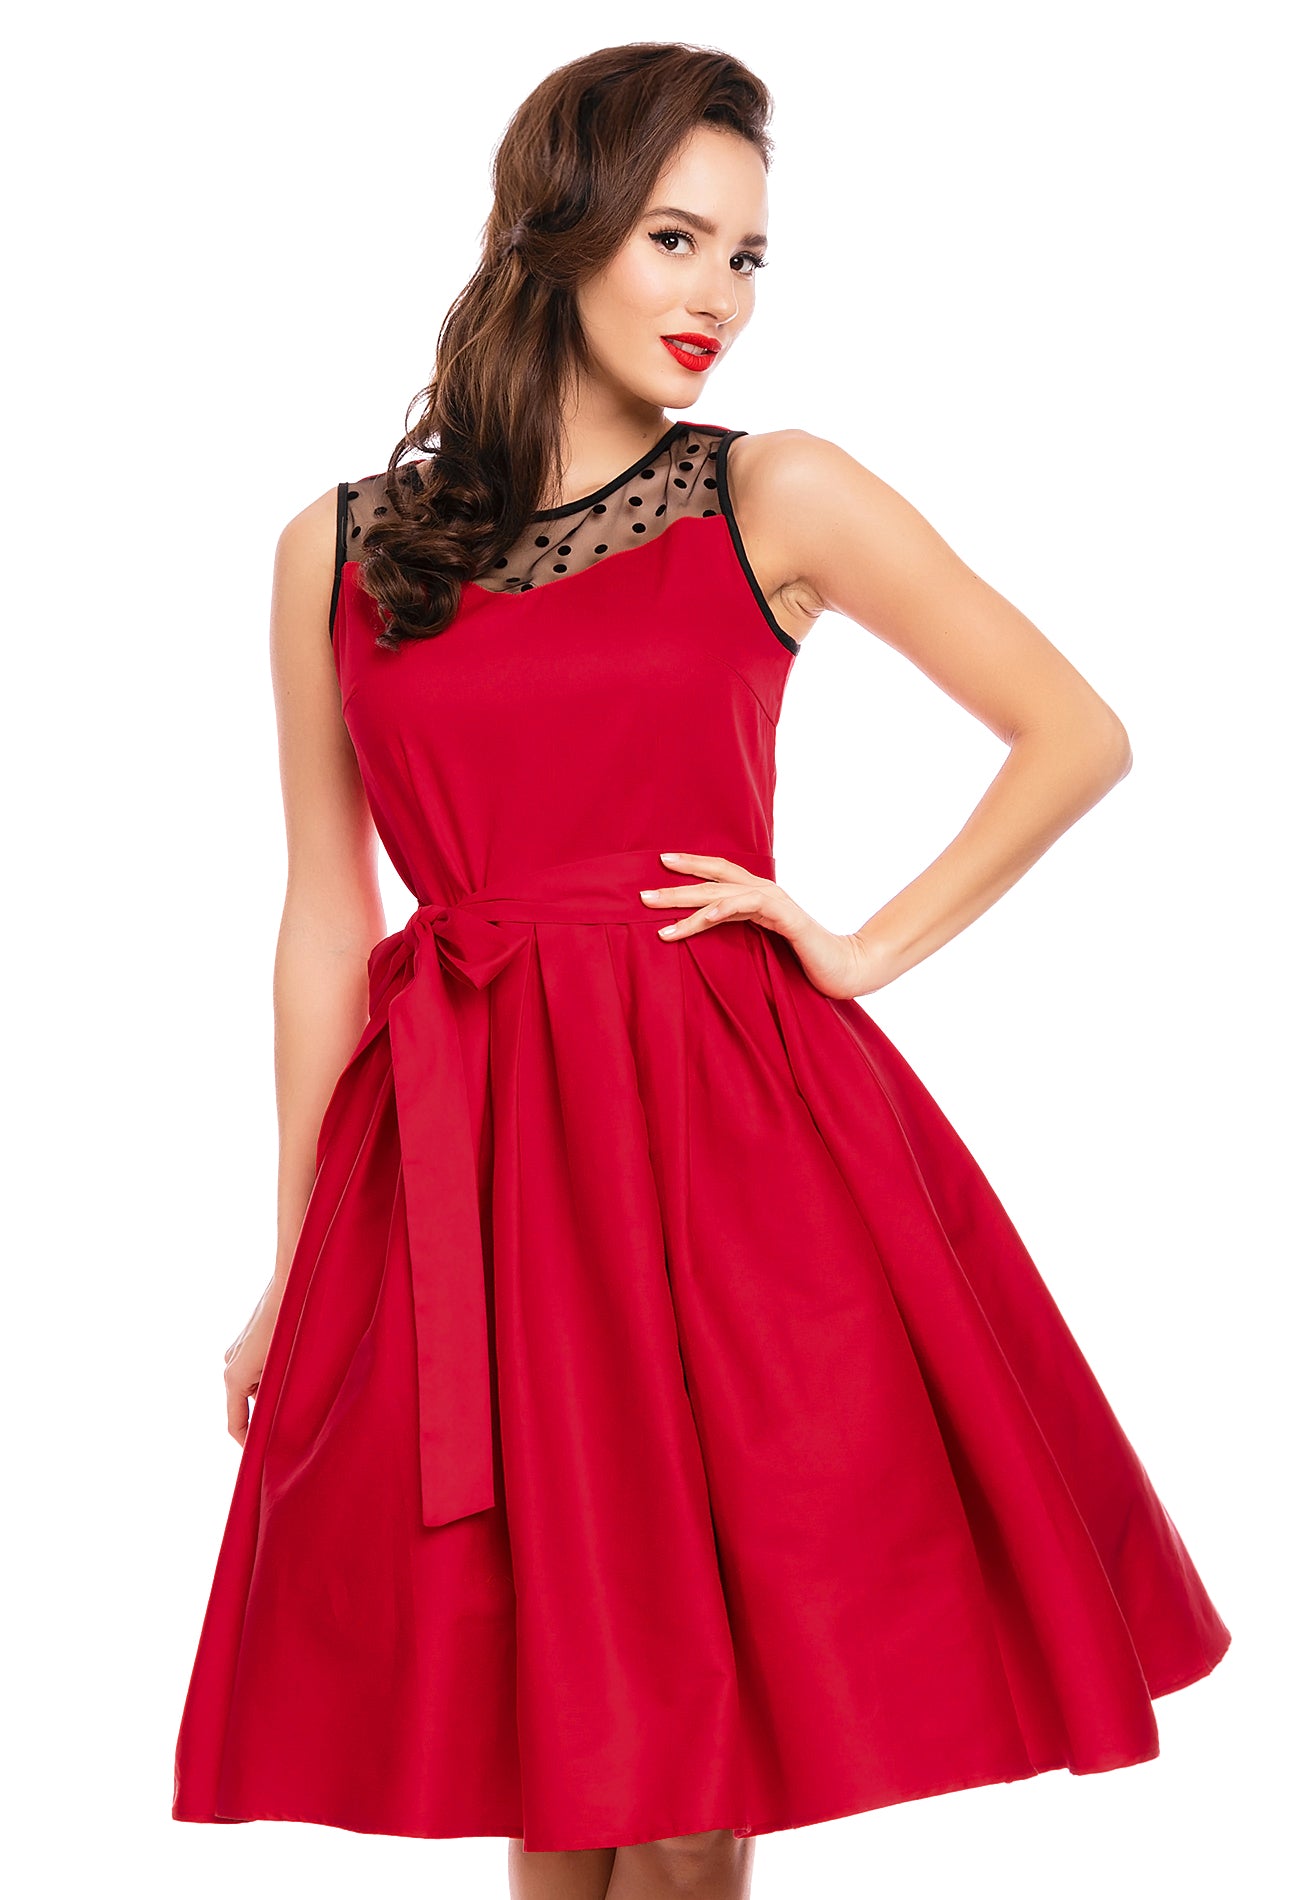 Model wearing red retro dress close up